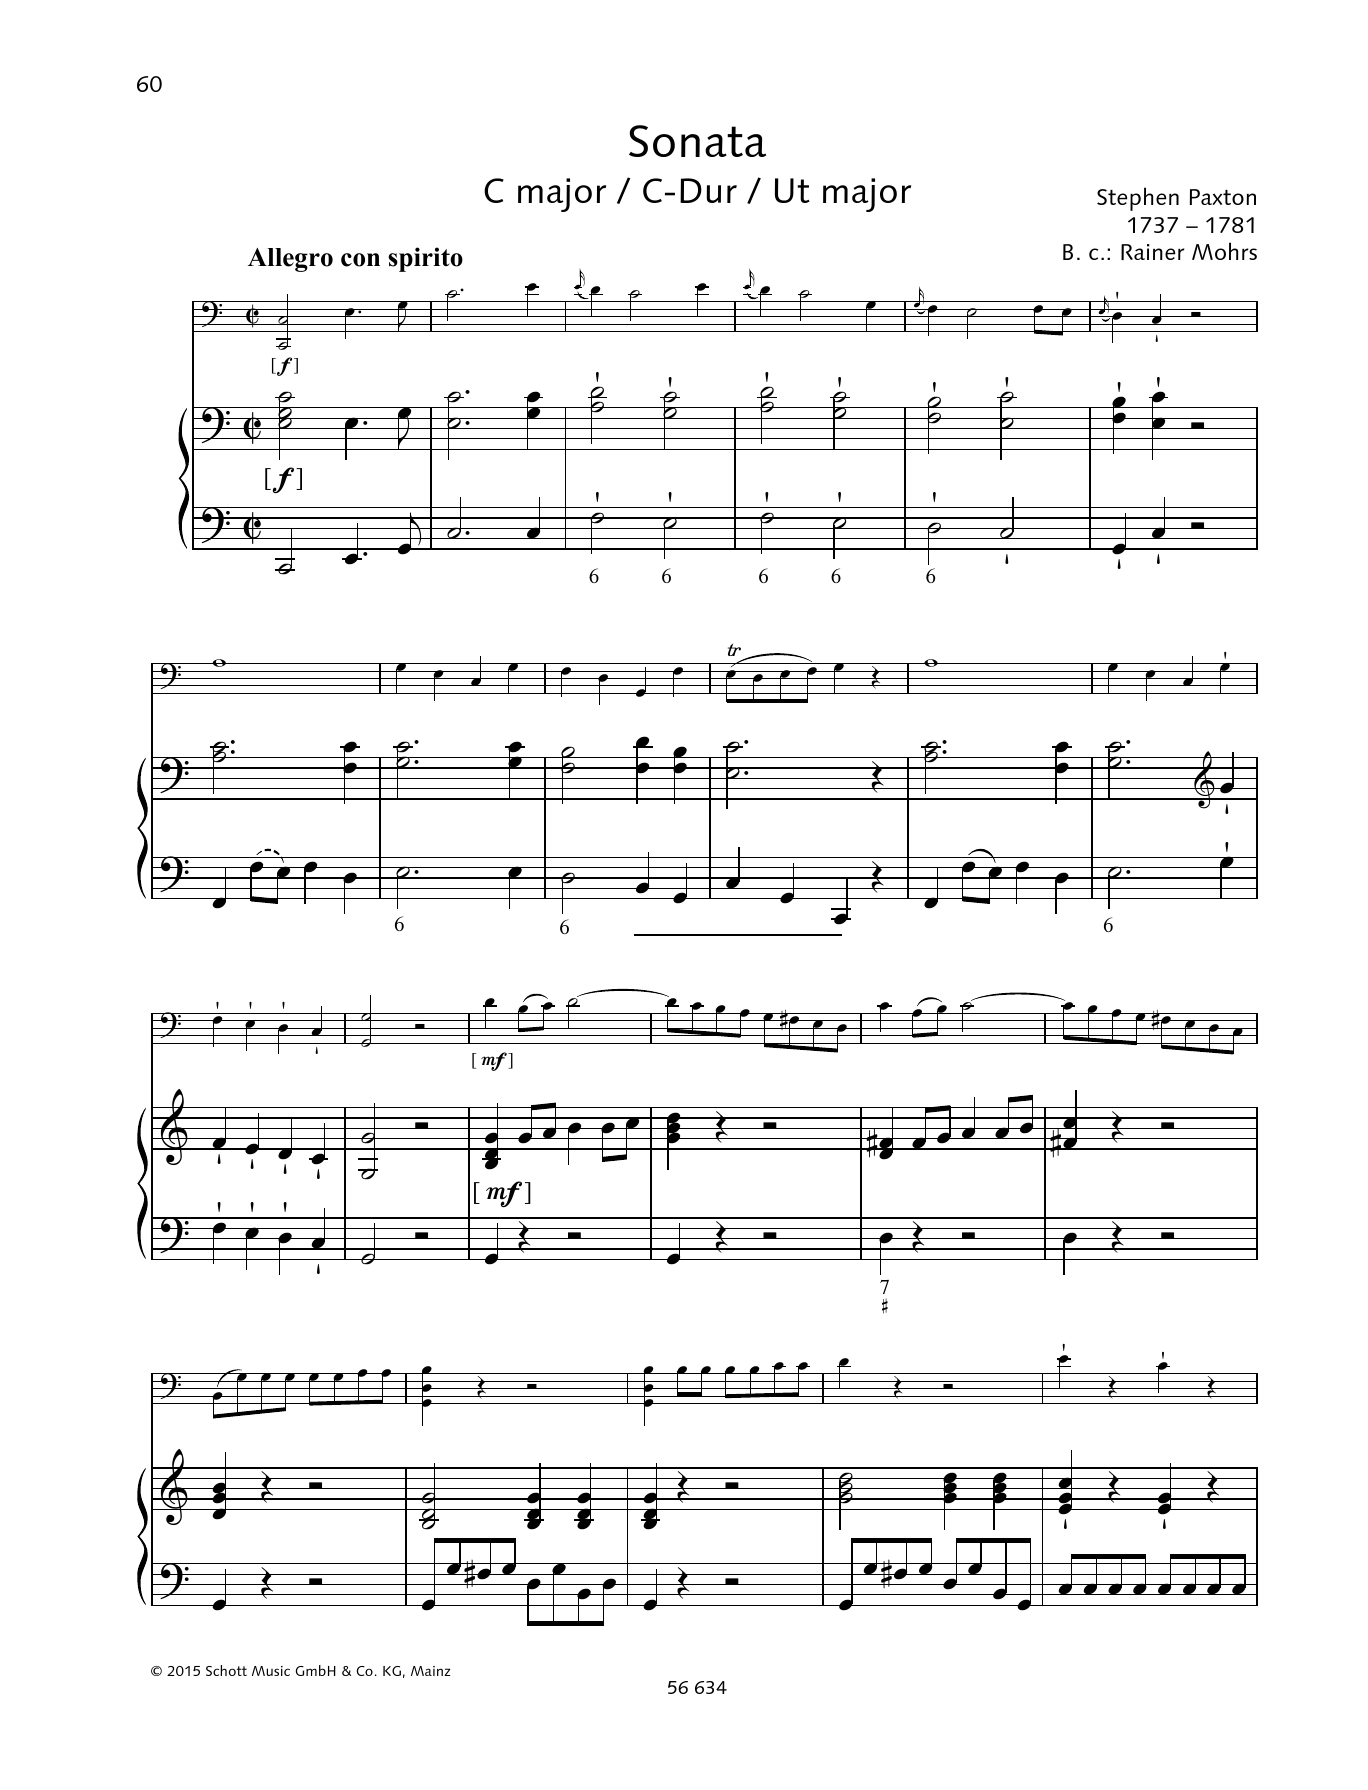 Sonata C Major sheet music